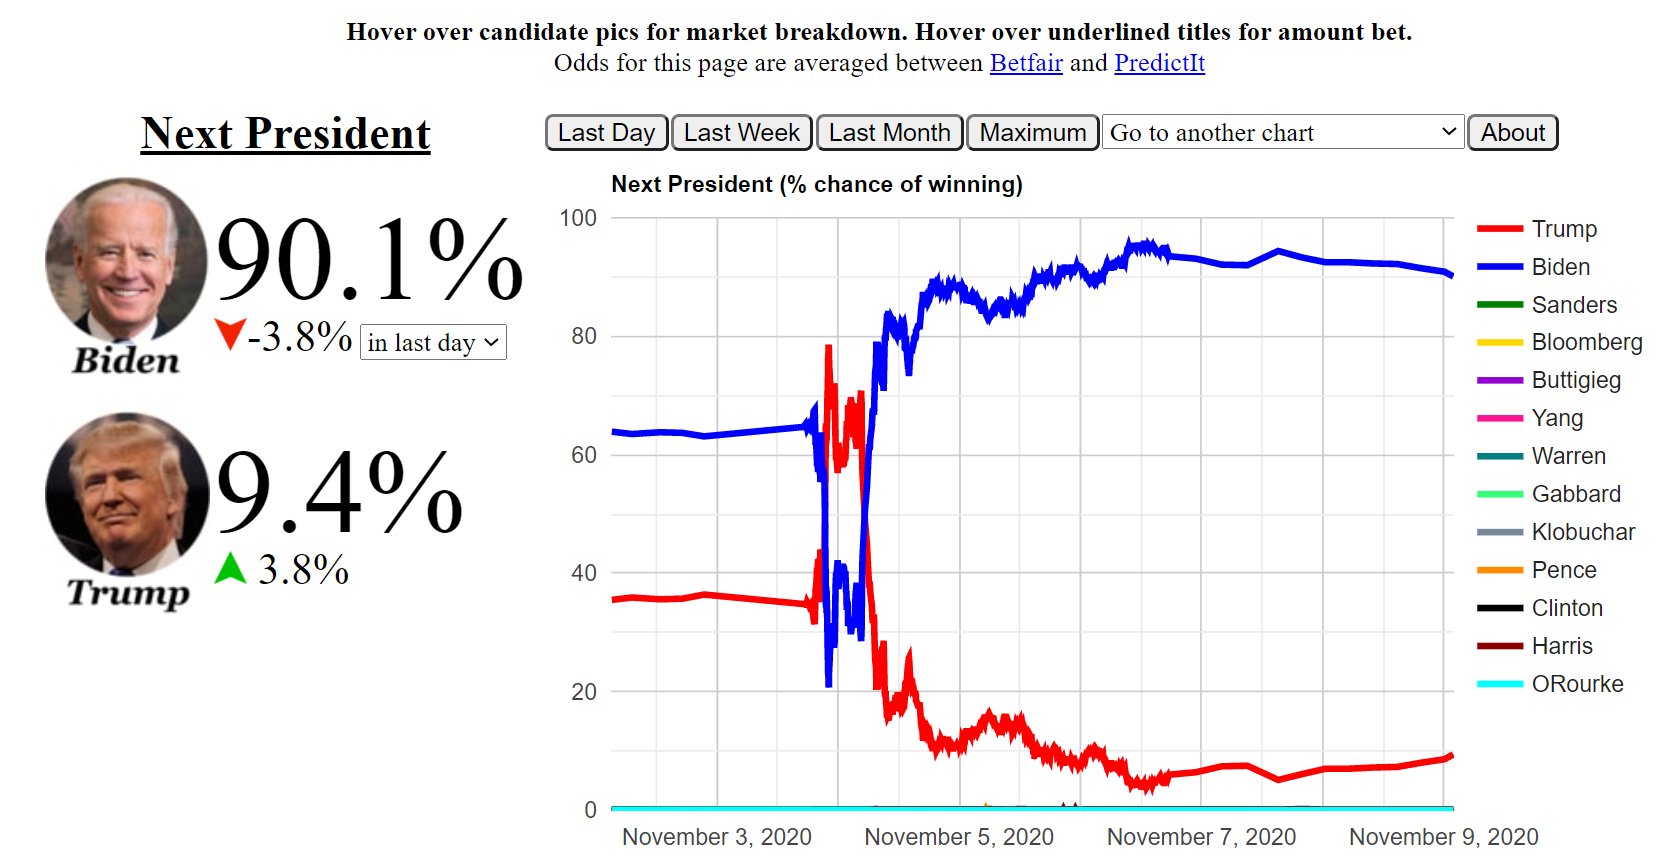 U.S Presidency 2020 betting odds (average of Betfair and PredictIt) 